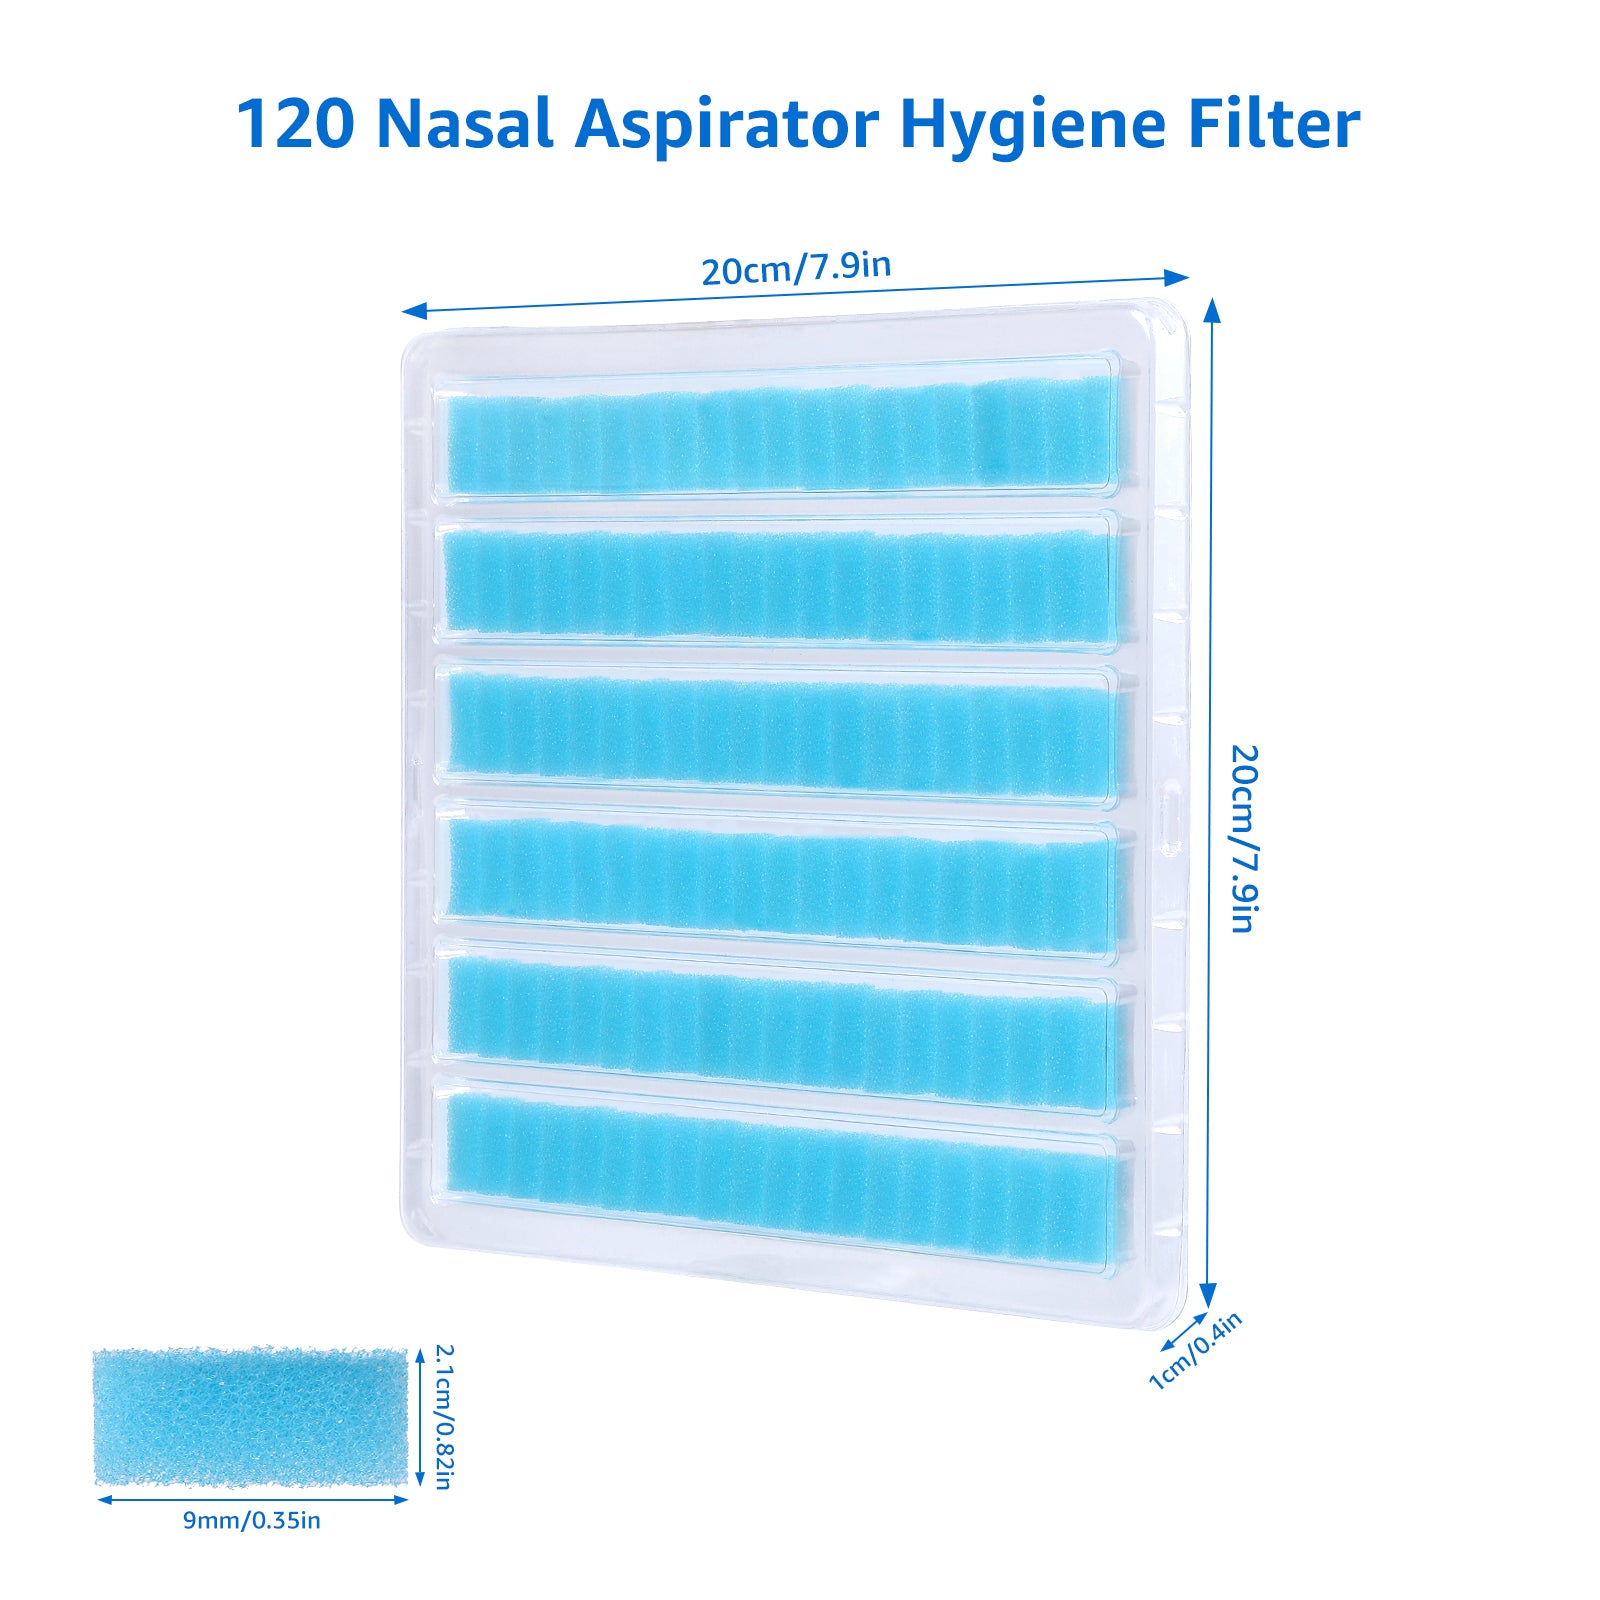  100-Pack of Premium Nasal Aspirator Hygiene Filters